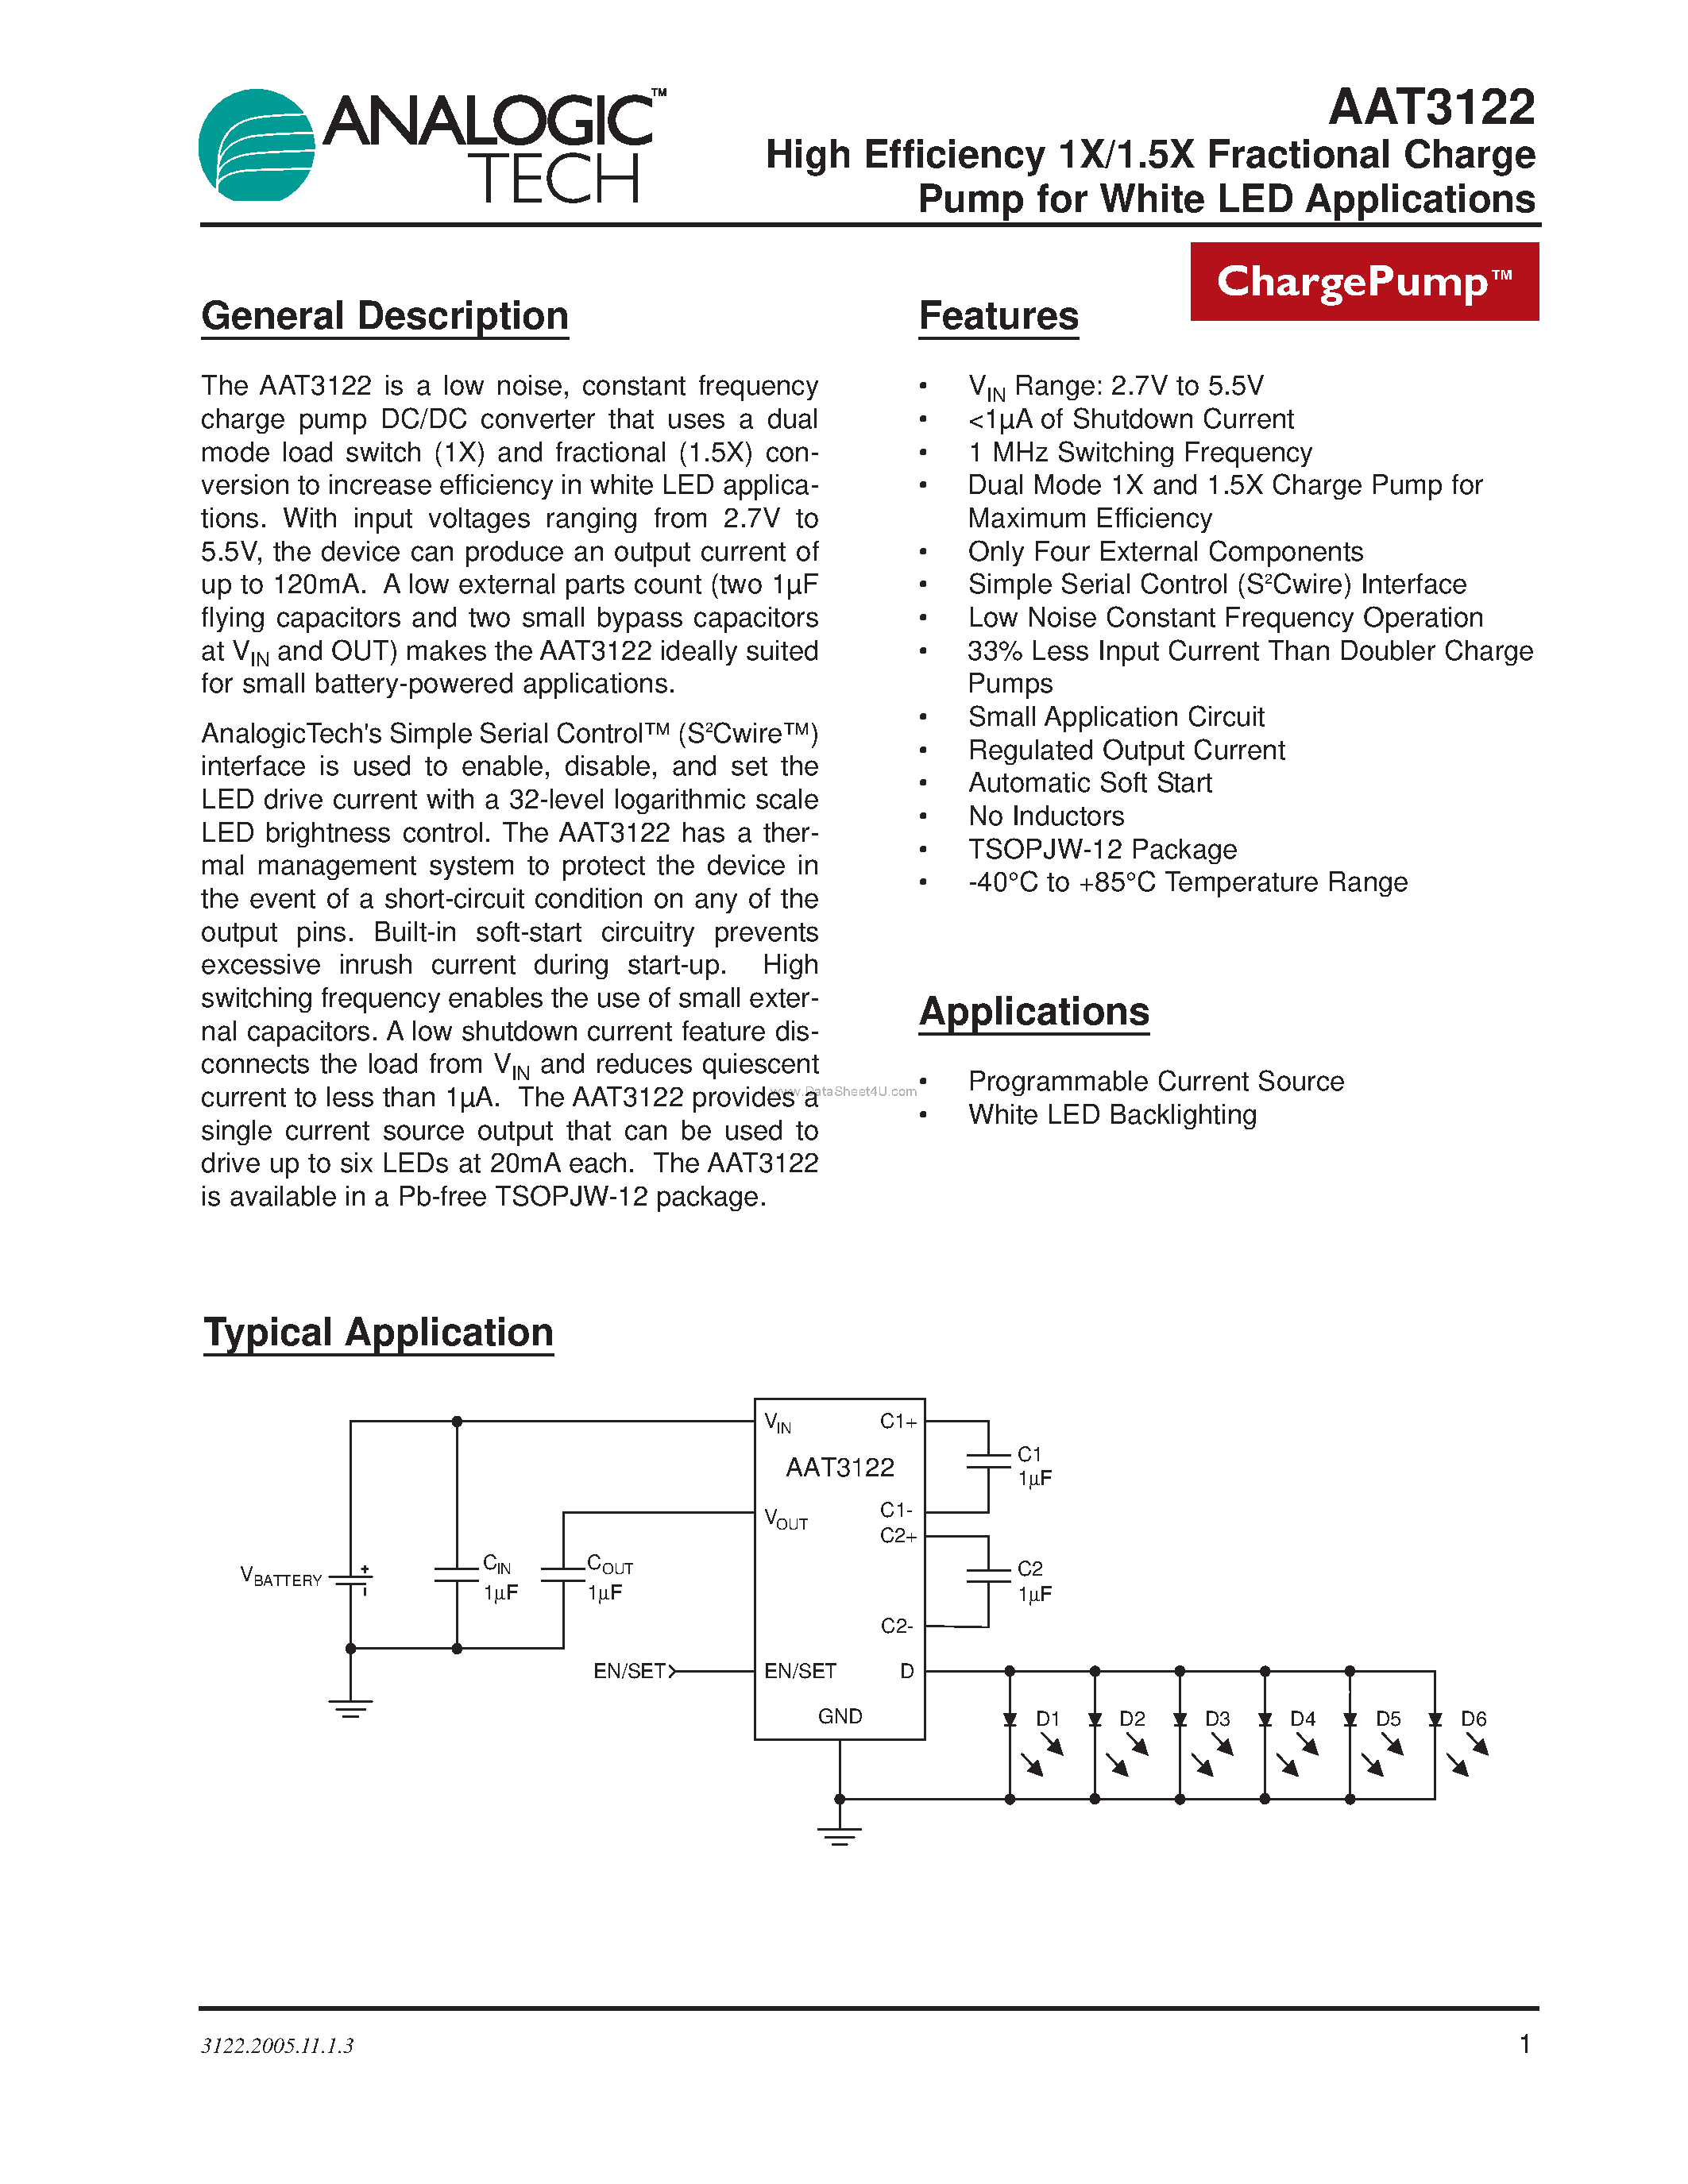 Даташит AAT3122 - High Efficiency 1X/1.5X Fractional Charge Pump страница 1